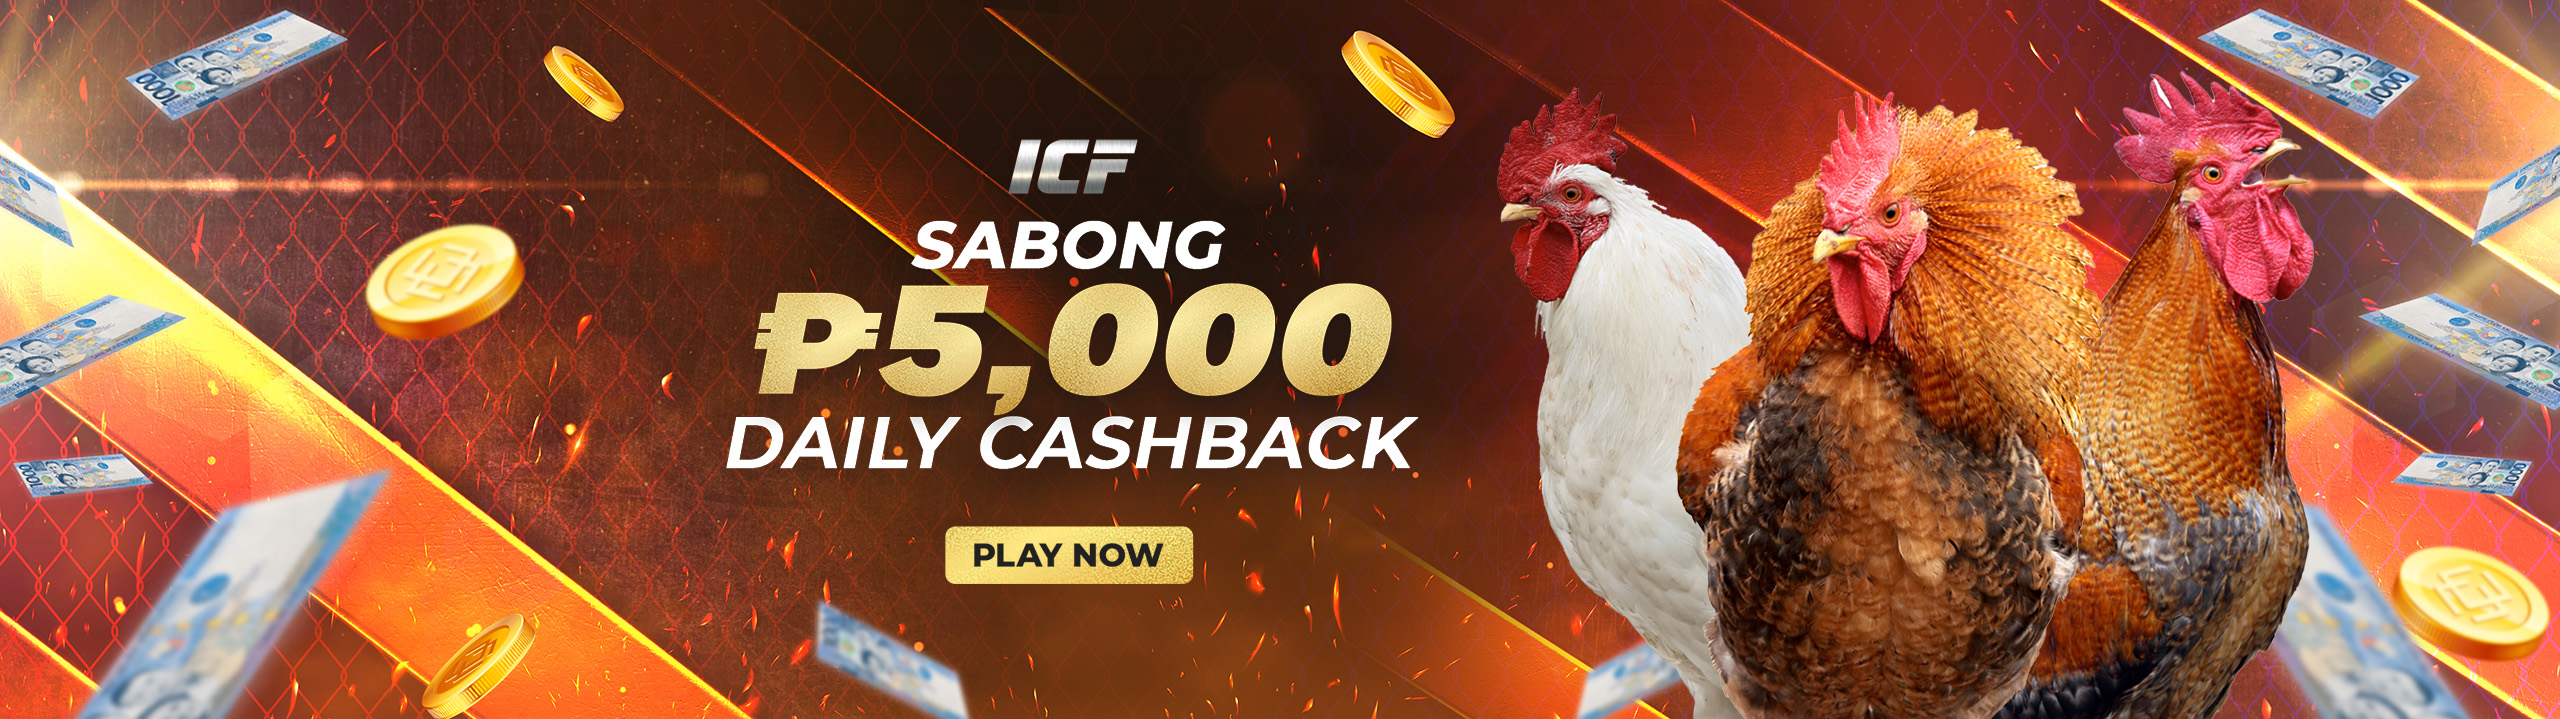 Sabong Daily Cashback